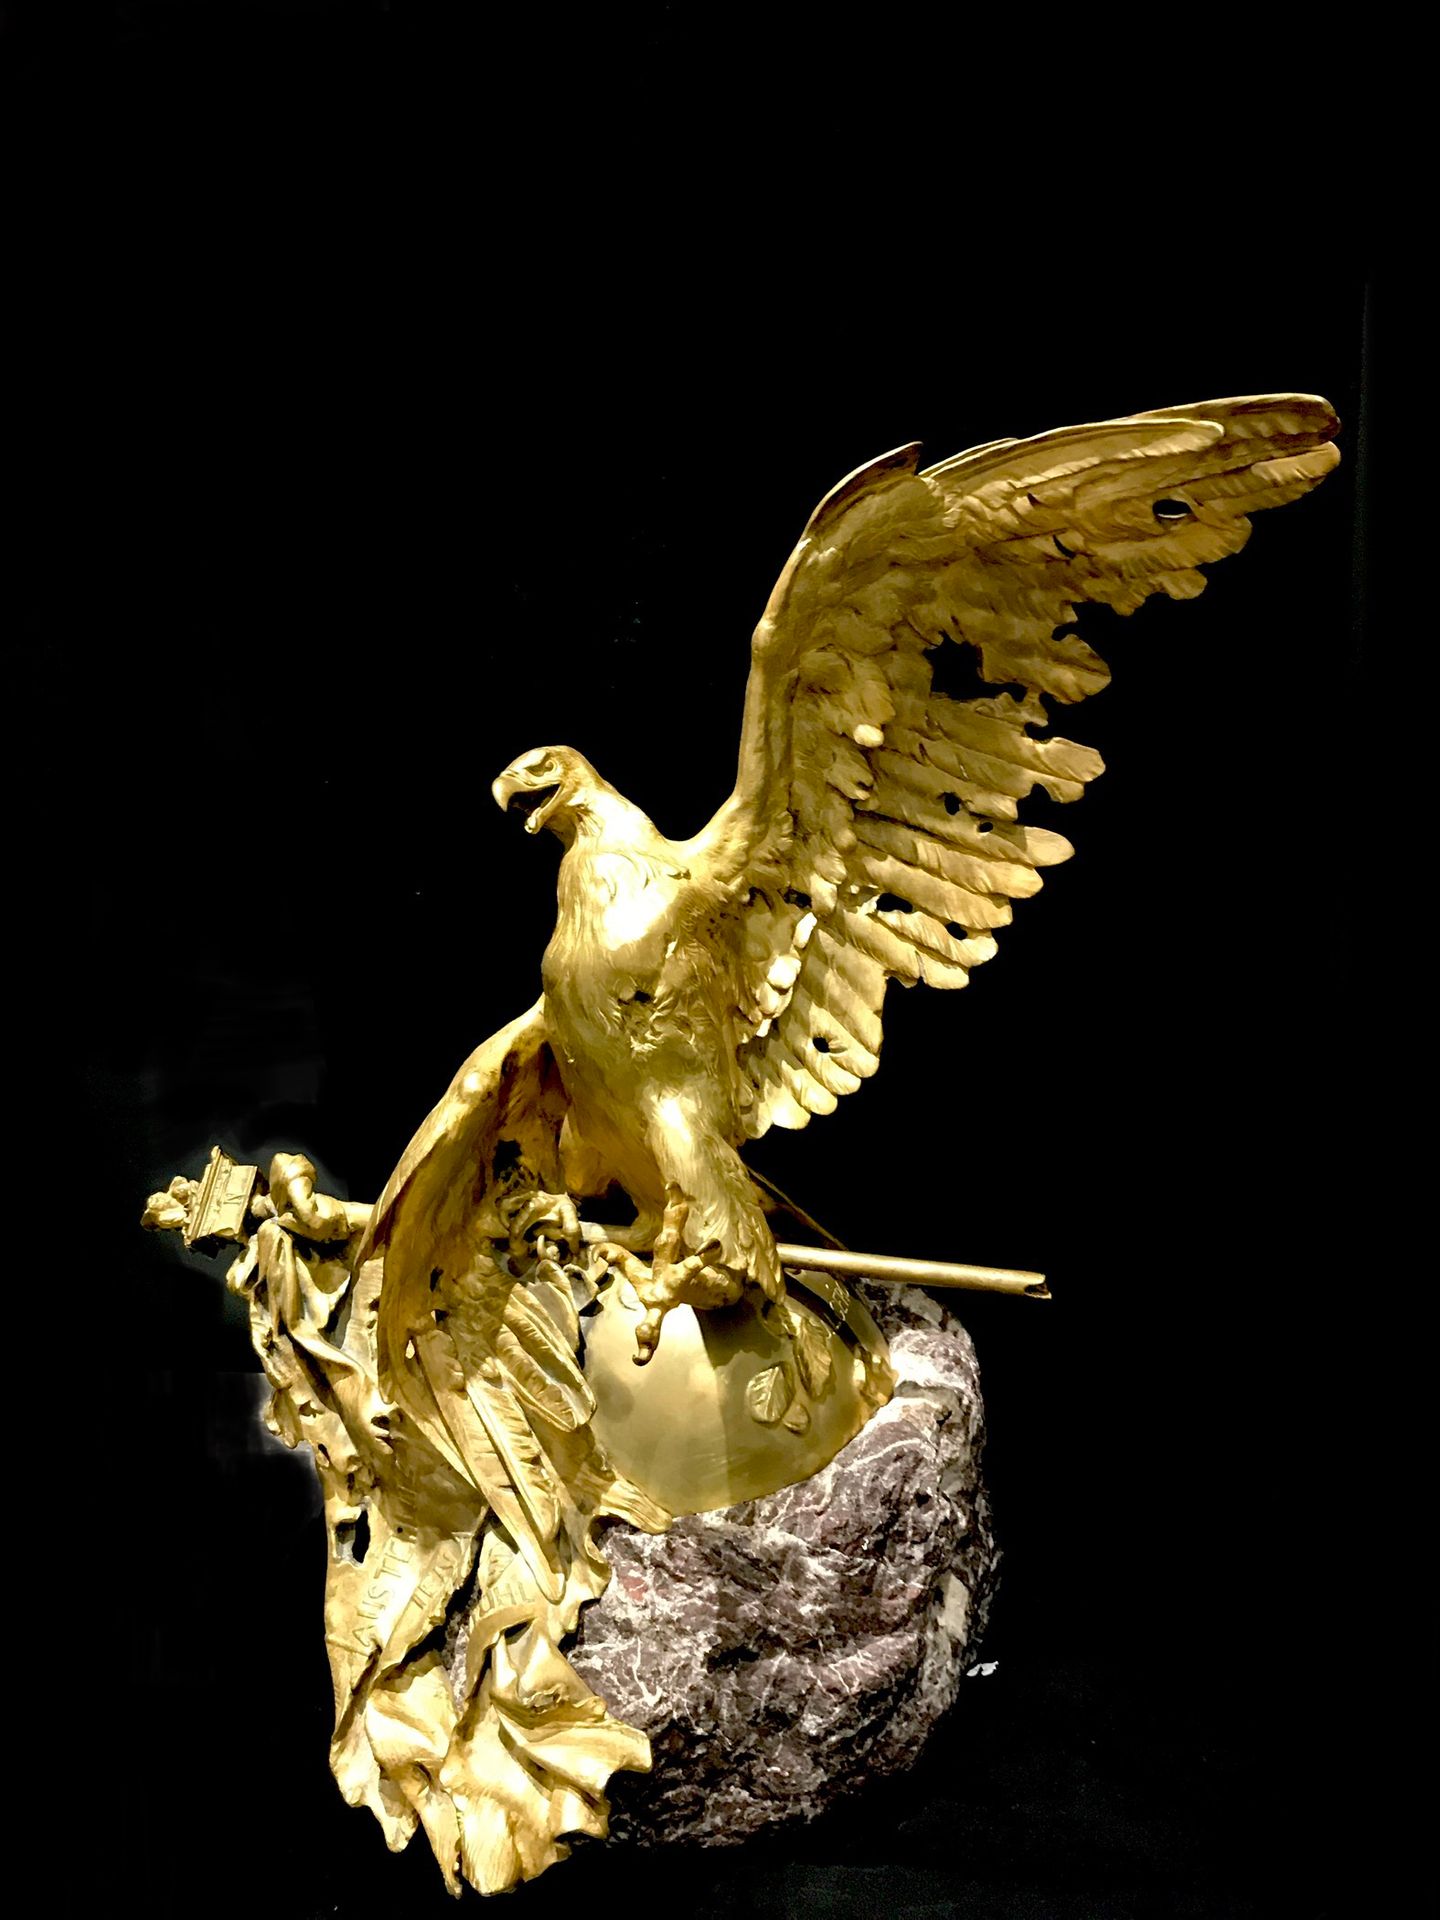 Null Jean-Léon GÉROME 1824-1904

"受伤的鹰" - "滑铁卢之鹰

带有金色铜锈的青铜雕塑，放置在粗糙的大理石底座上。

底座上&hellip;